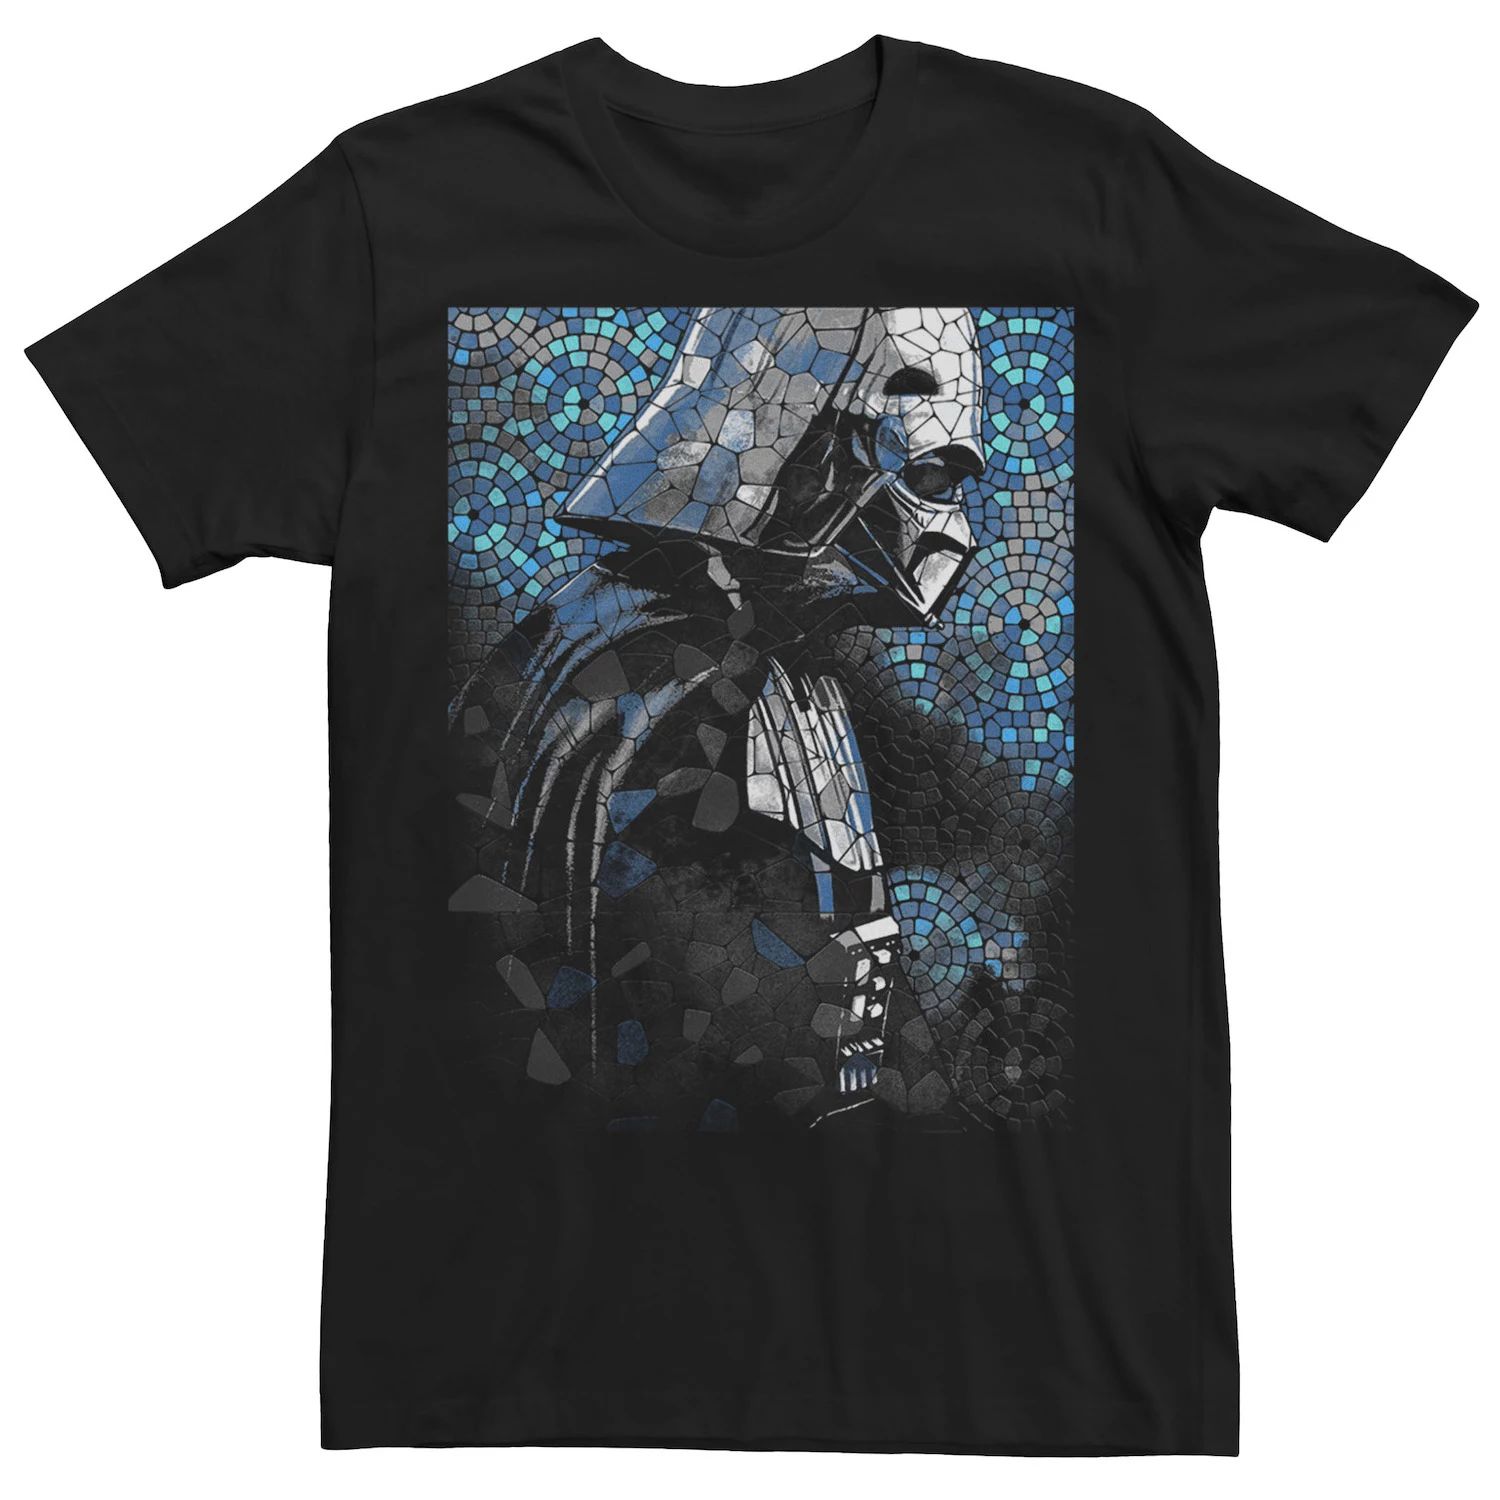 Мужская футболка с мозаикой «Звездные войны» Дарта Вейдера Licensed Character мужская футболка с костюмом дарта вейдера звездные войны licensed character